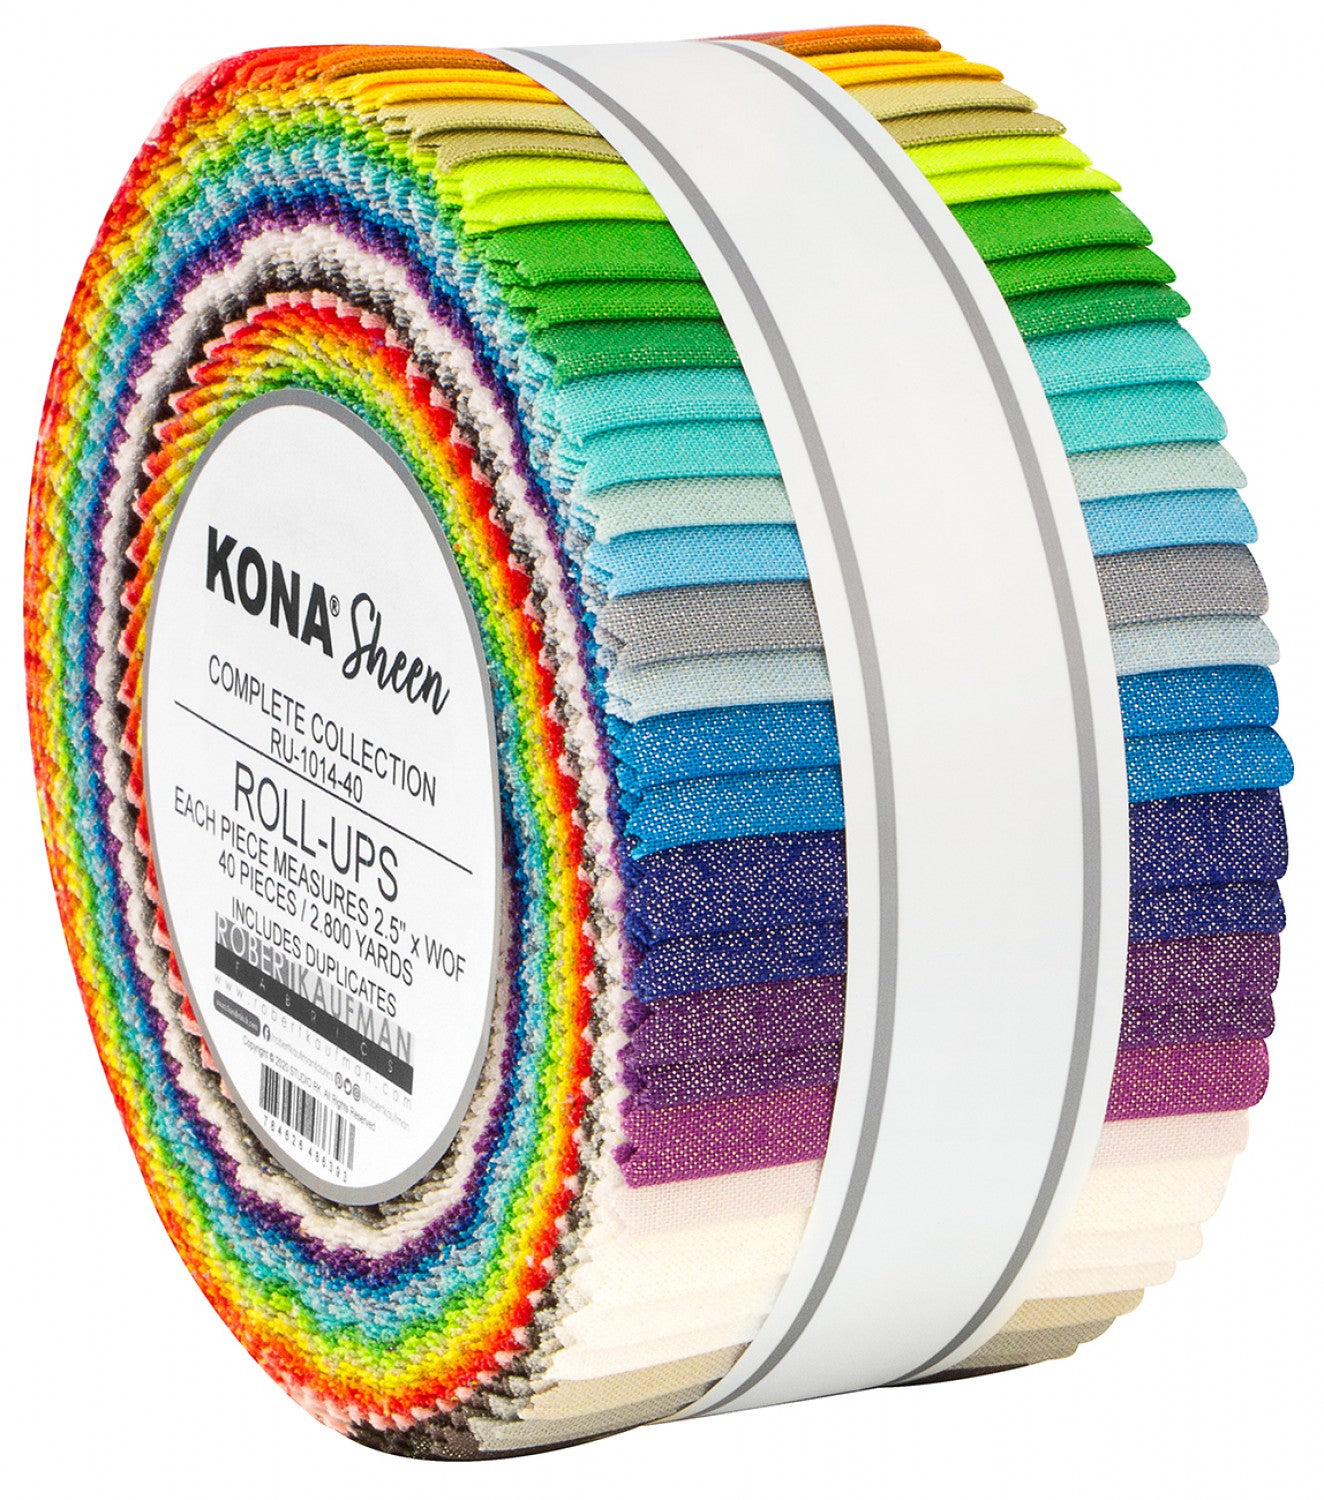 Kona Cotton Jelly Roll - Sheen med Glitter